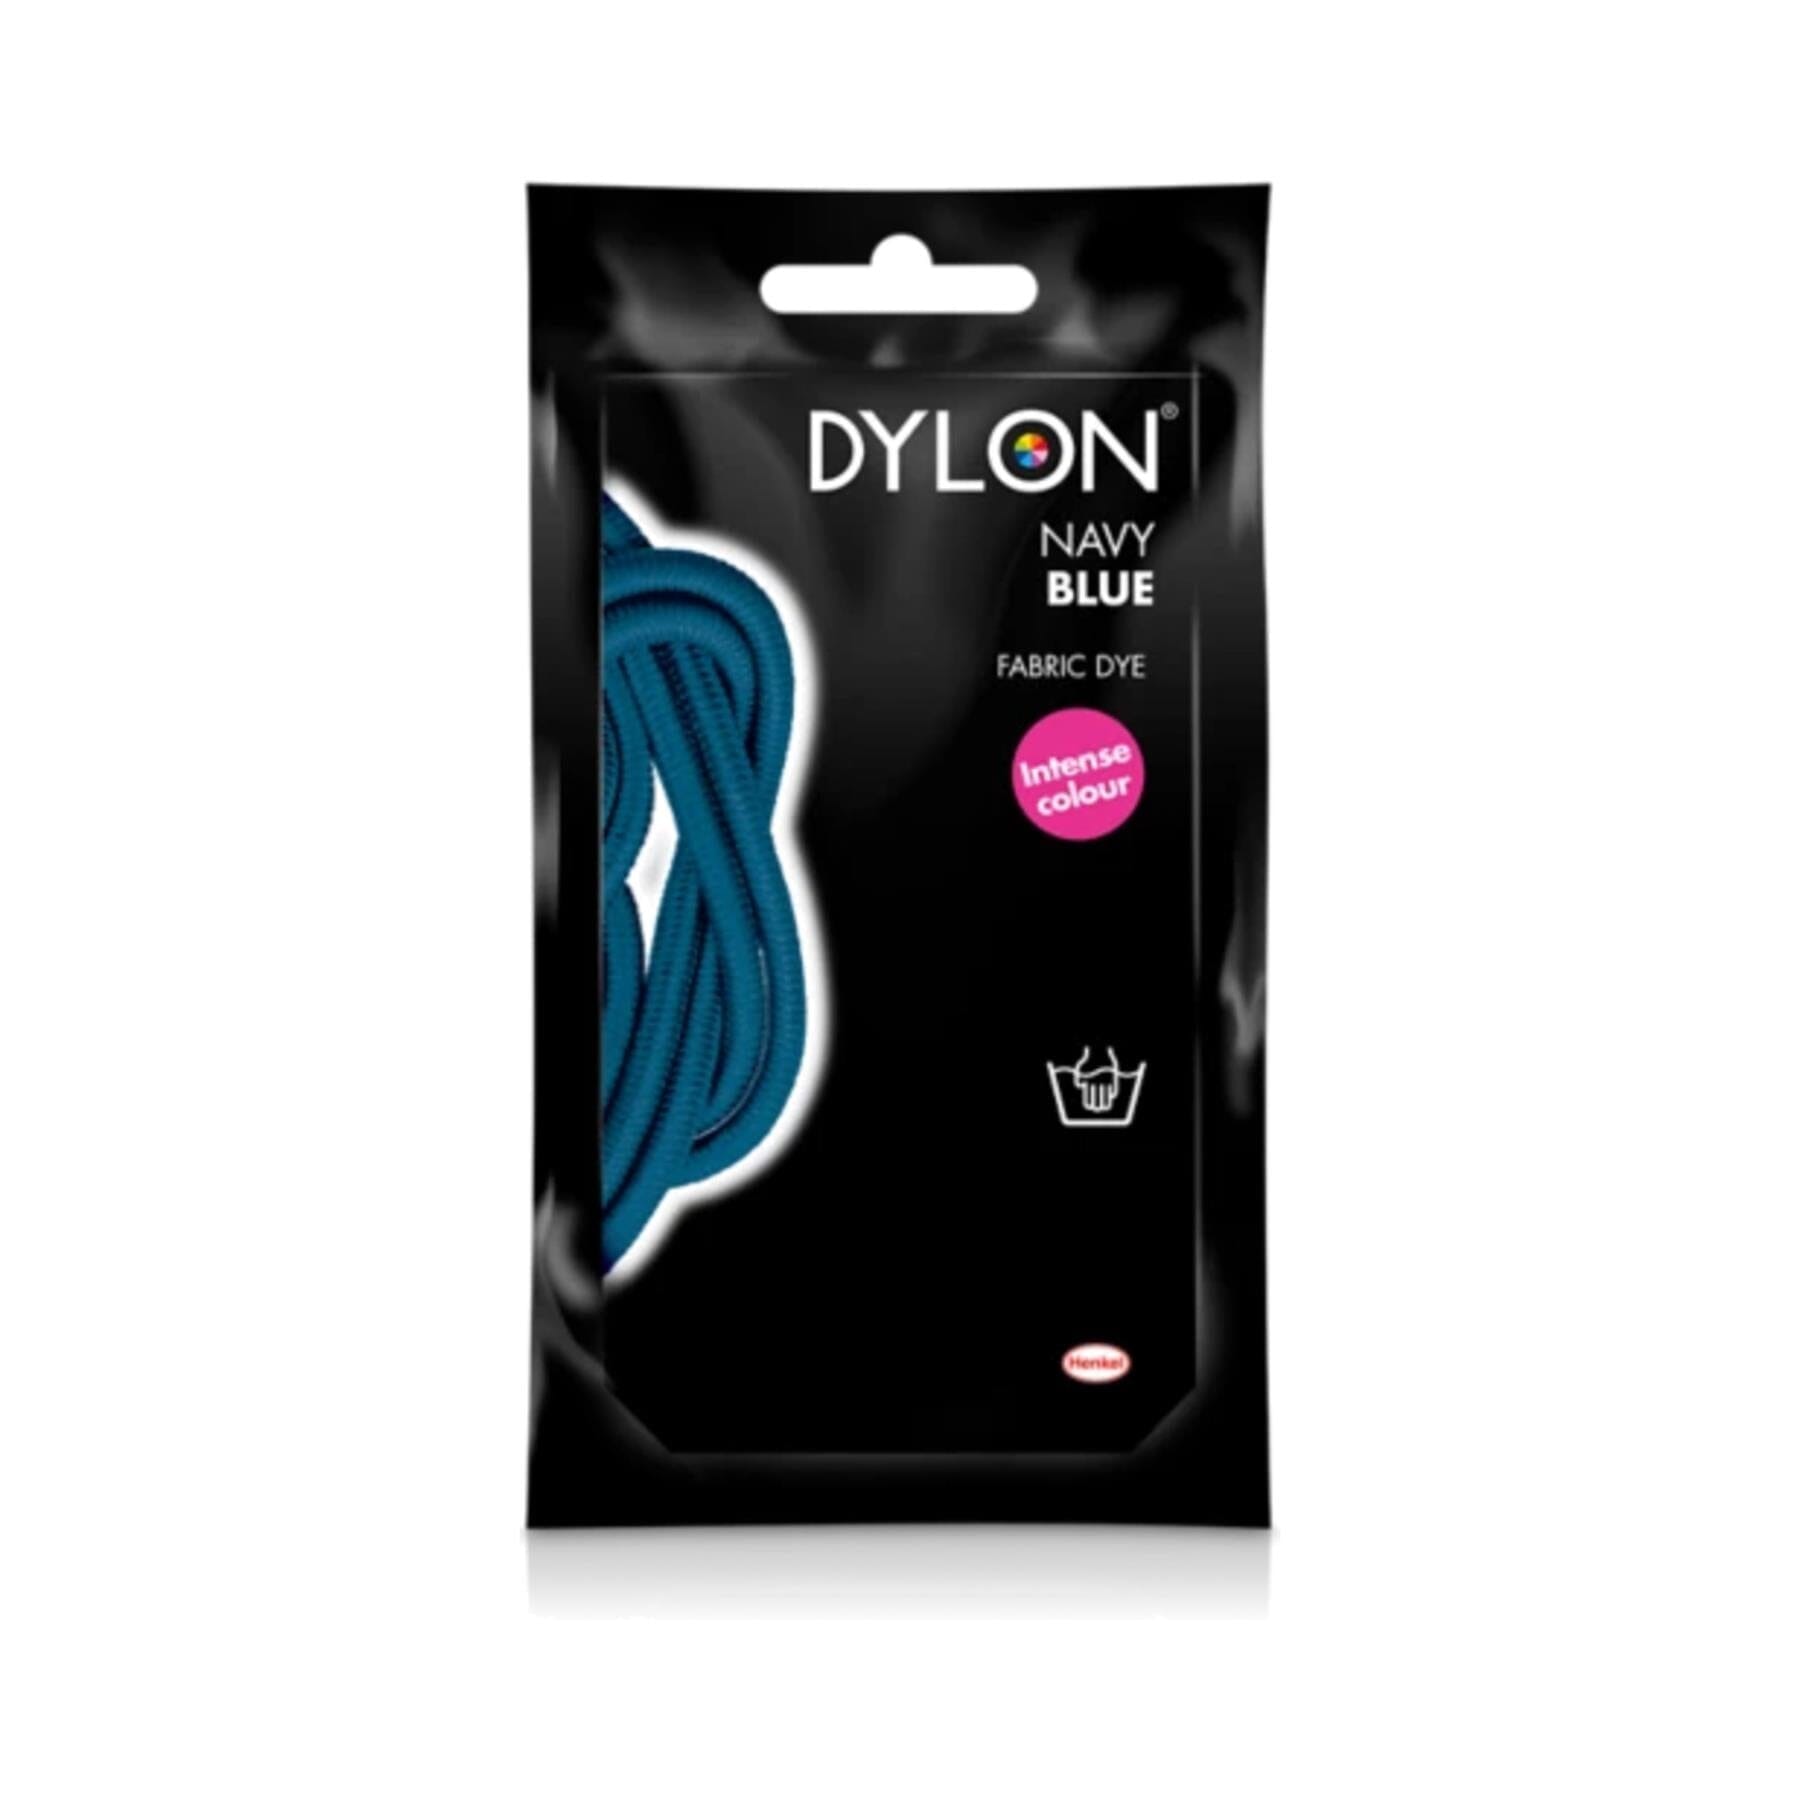 Dylon Hand Dye Sachet Navy Blue Fabric Dyes | Snape & Sons